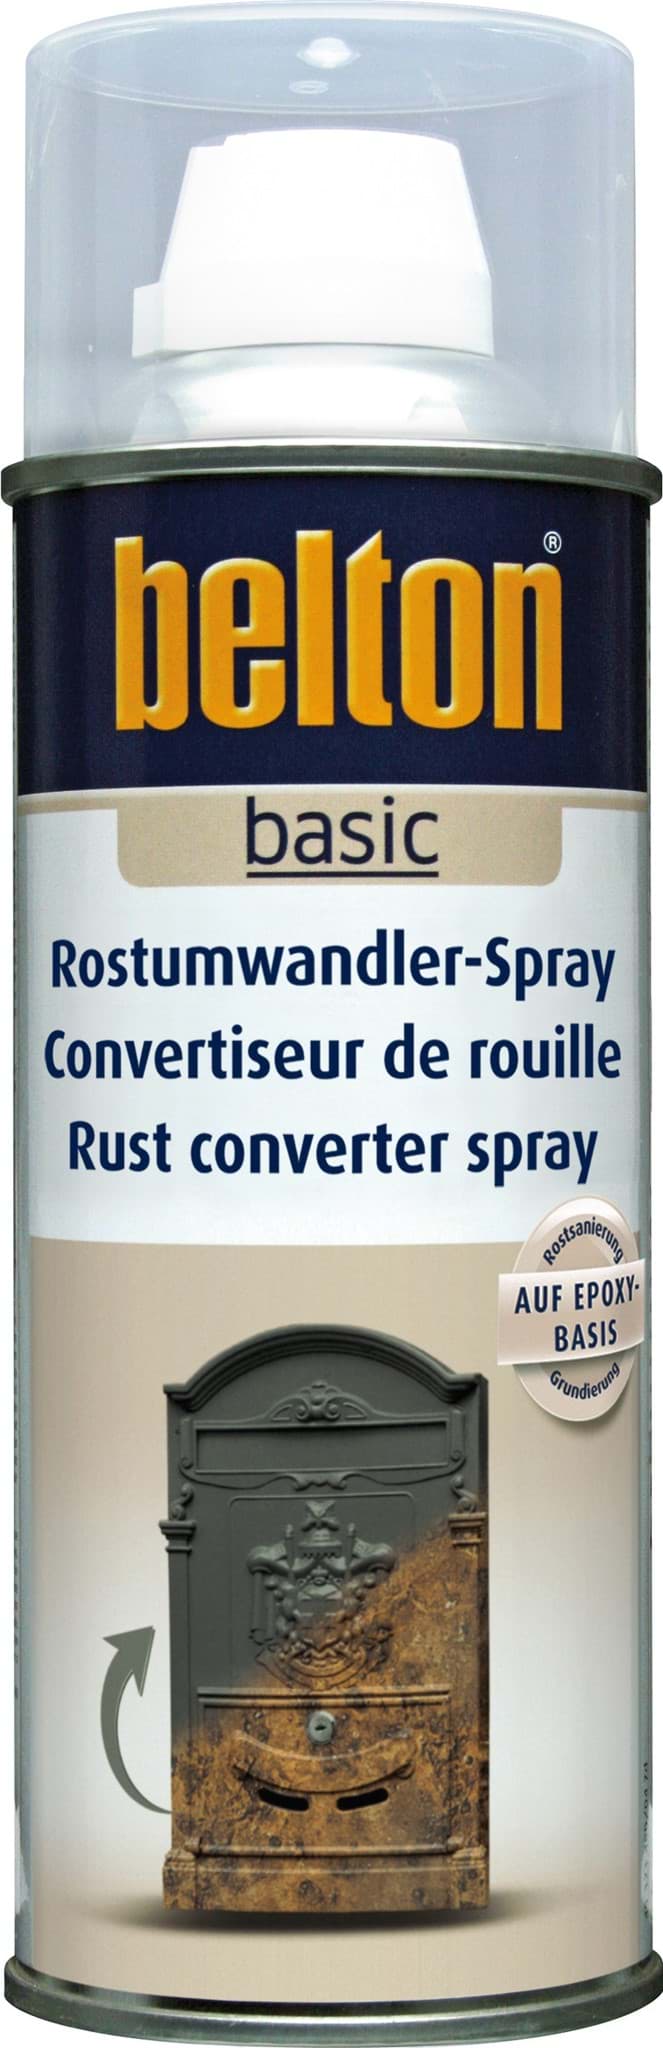 Belton basic Rostumwandler - Spray resmi